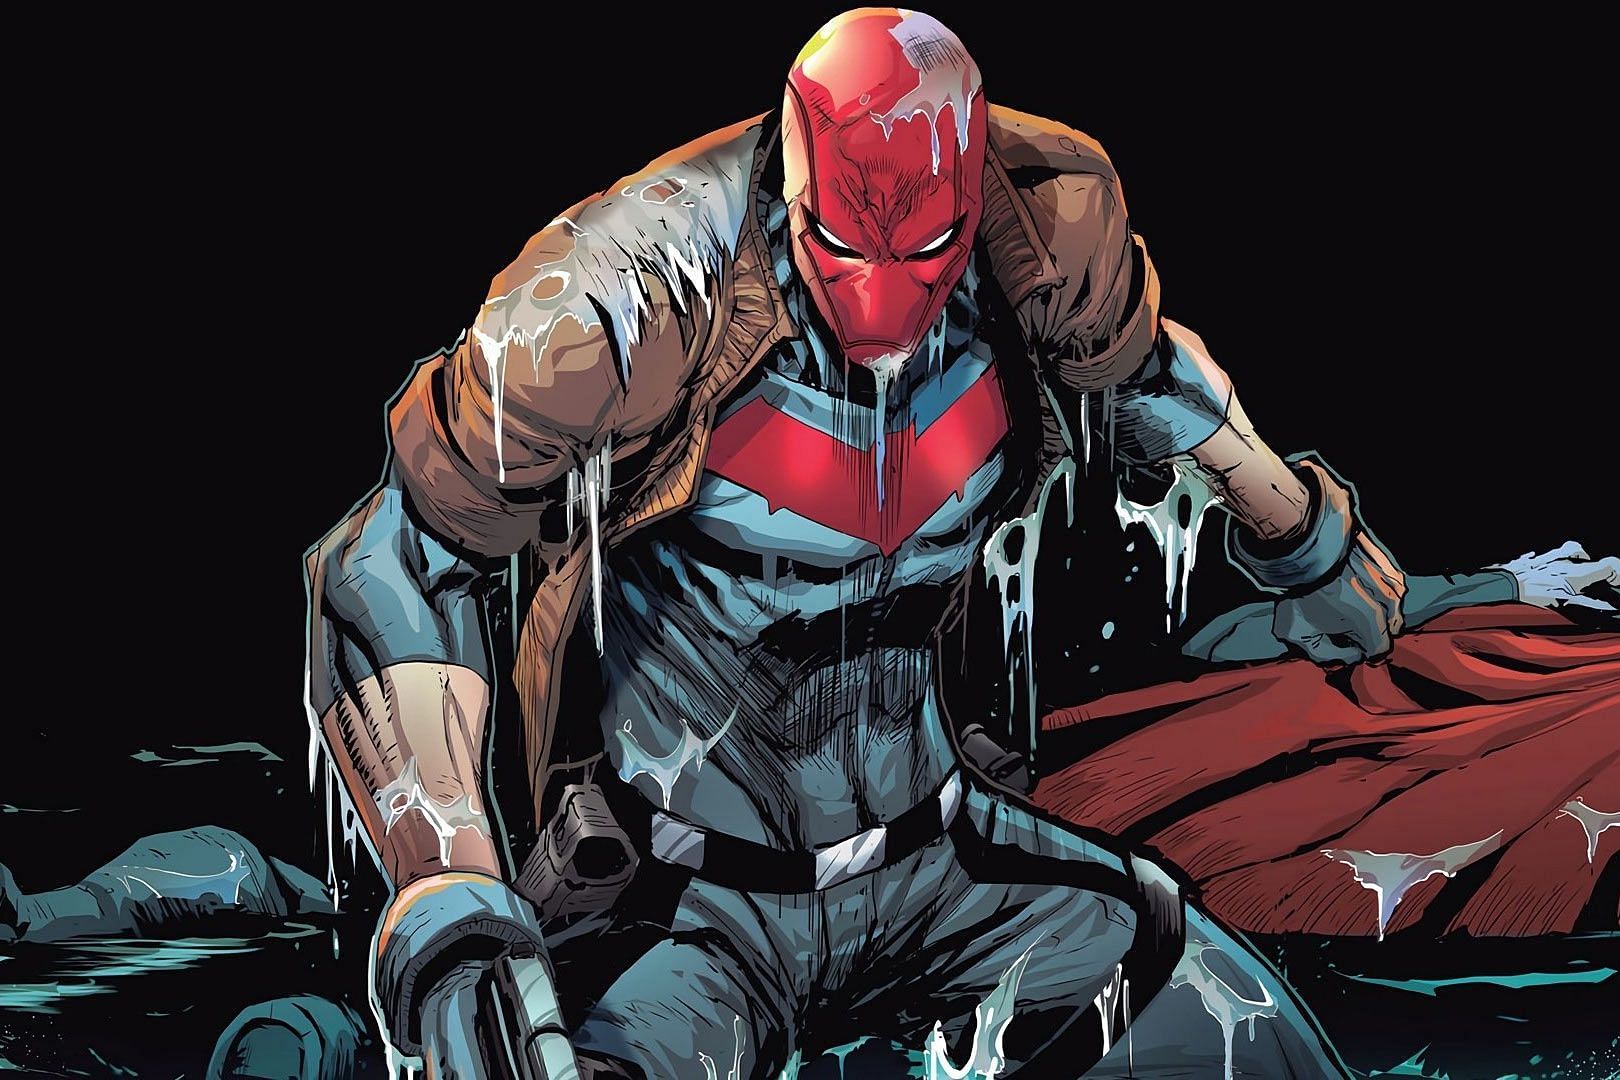 Red Hood brings his unique brand of vigilante justice to the big screen (Image via DC Comics)